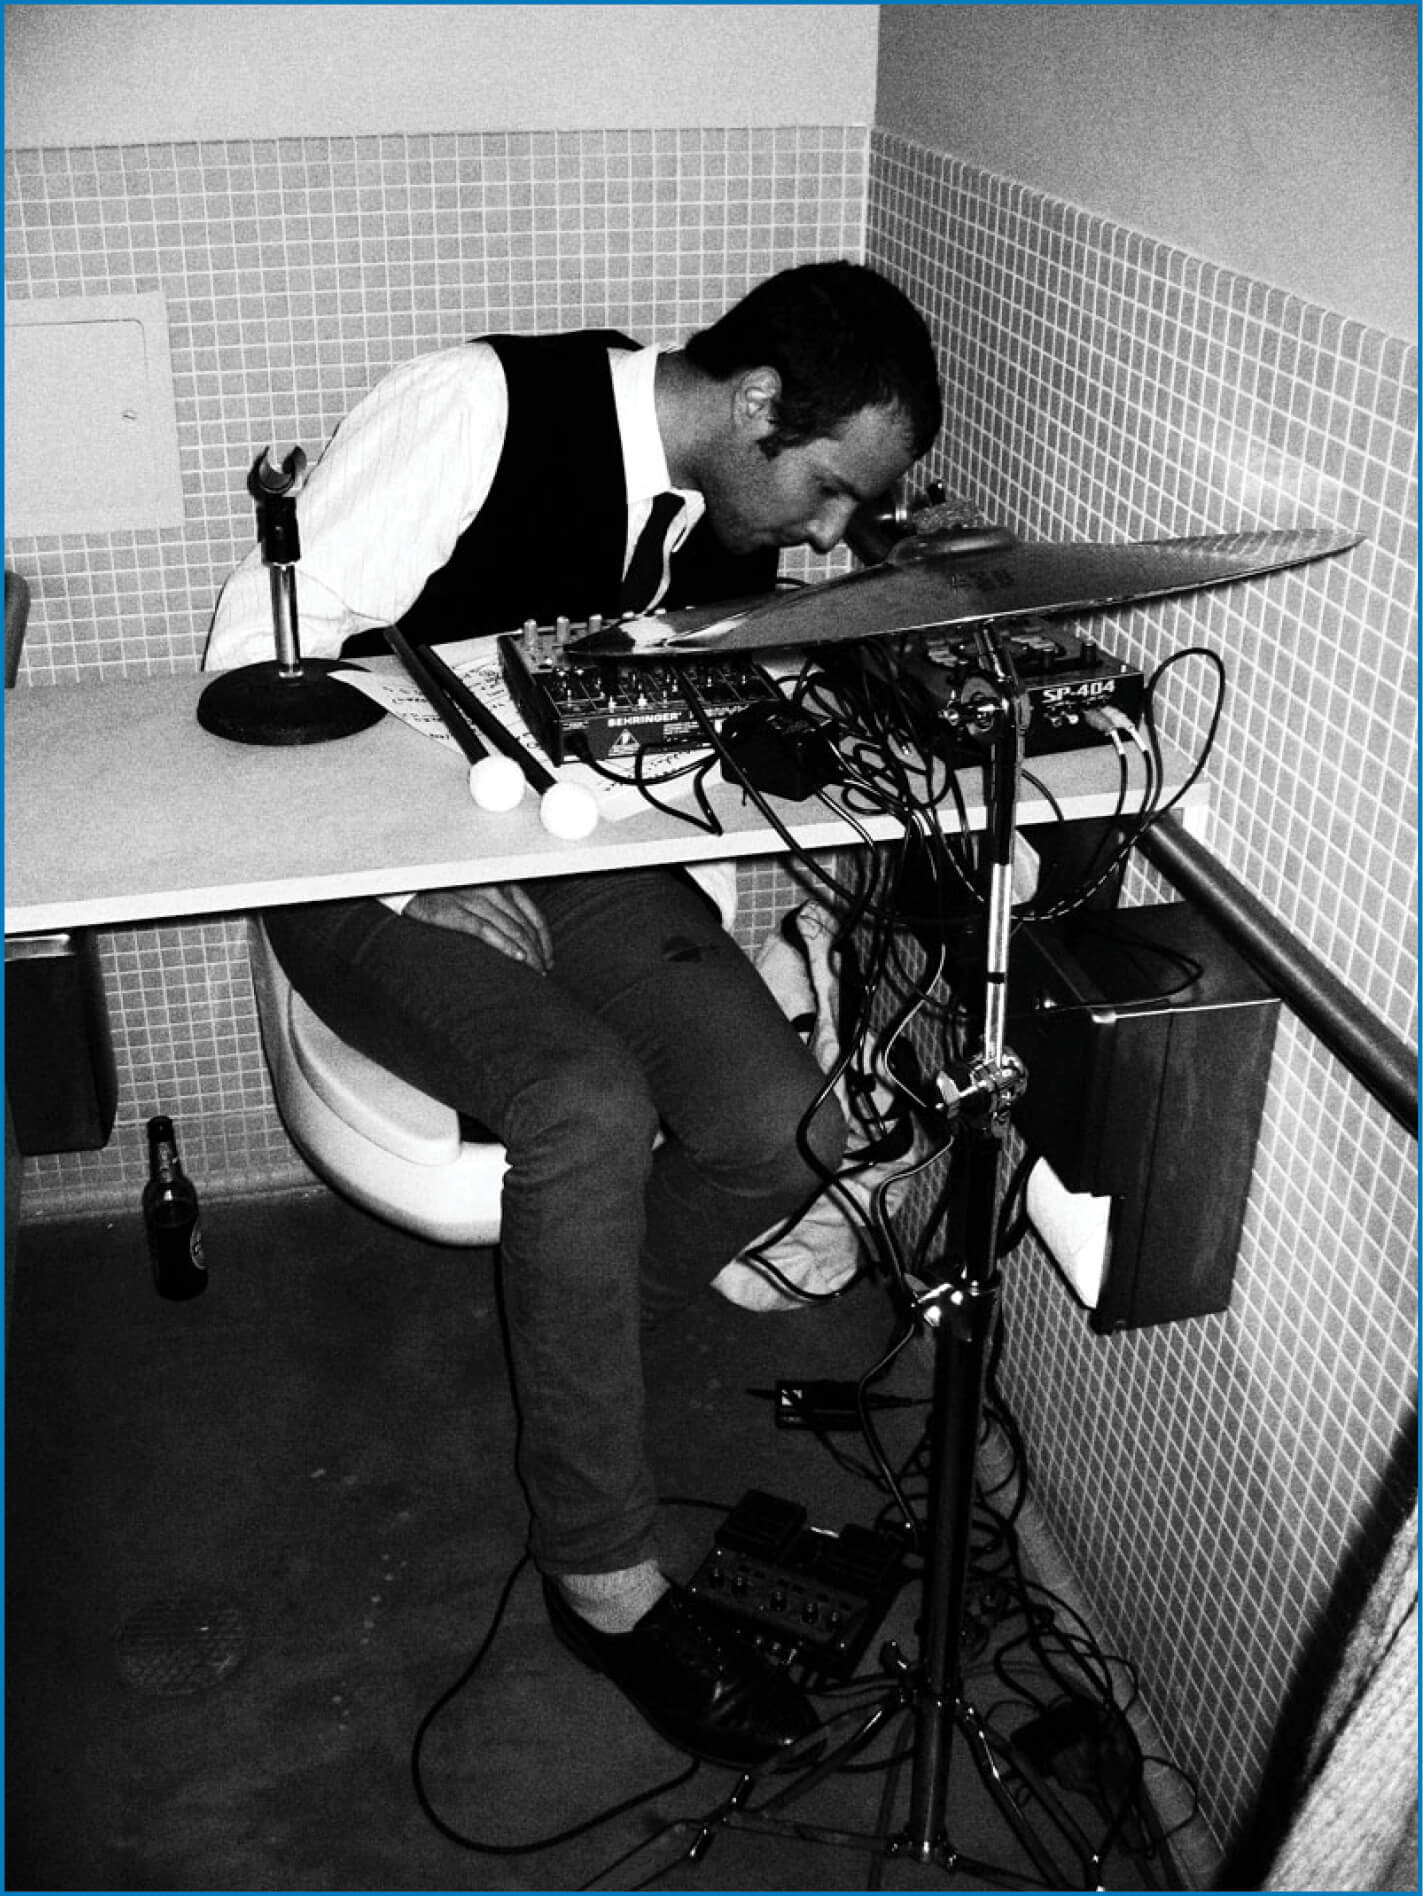 Man child (Sadie Siegel) playing weird music in a bathroom